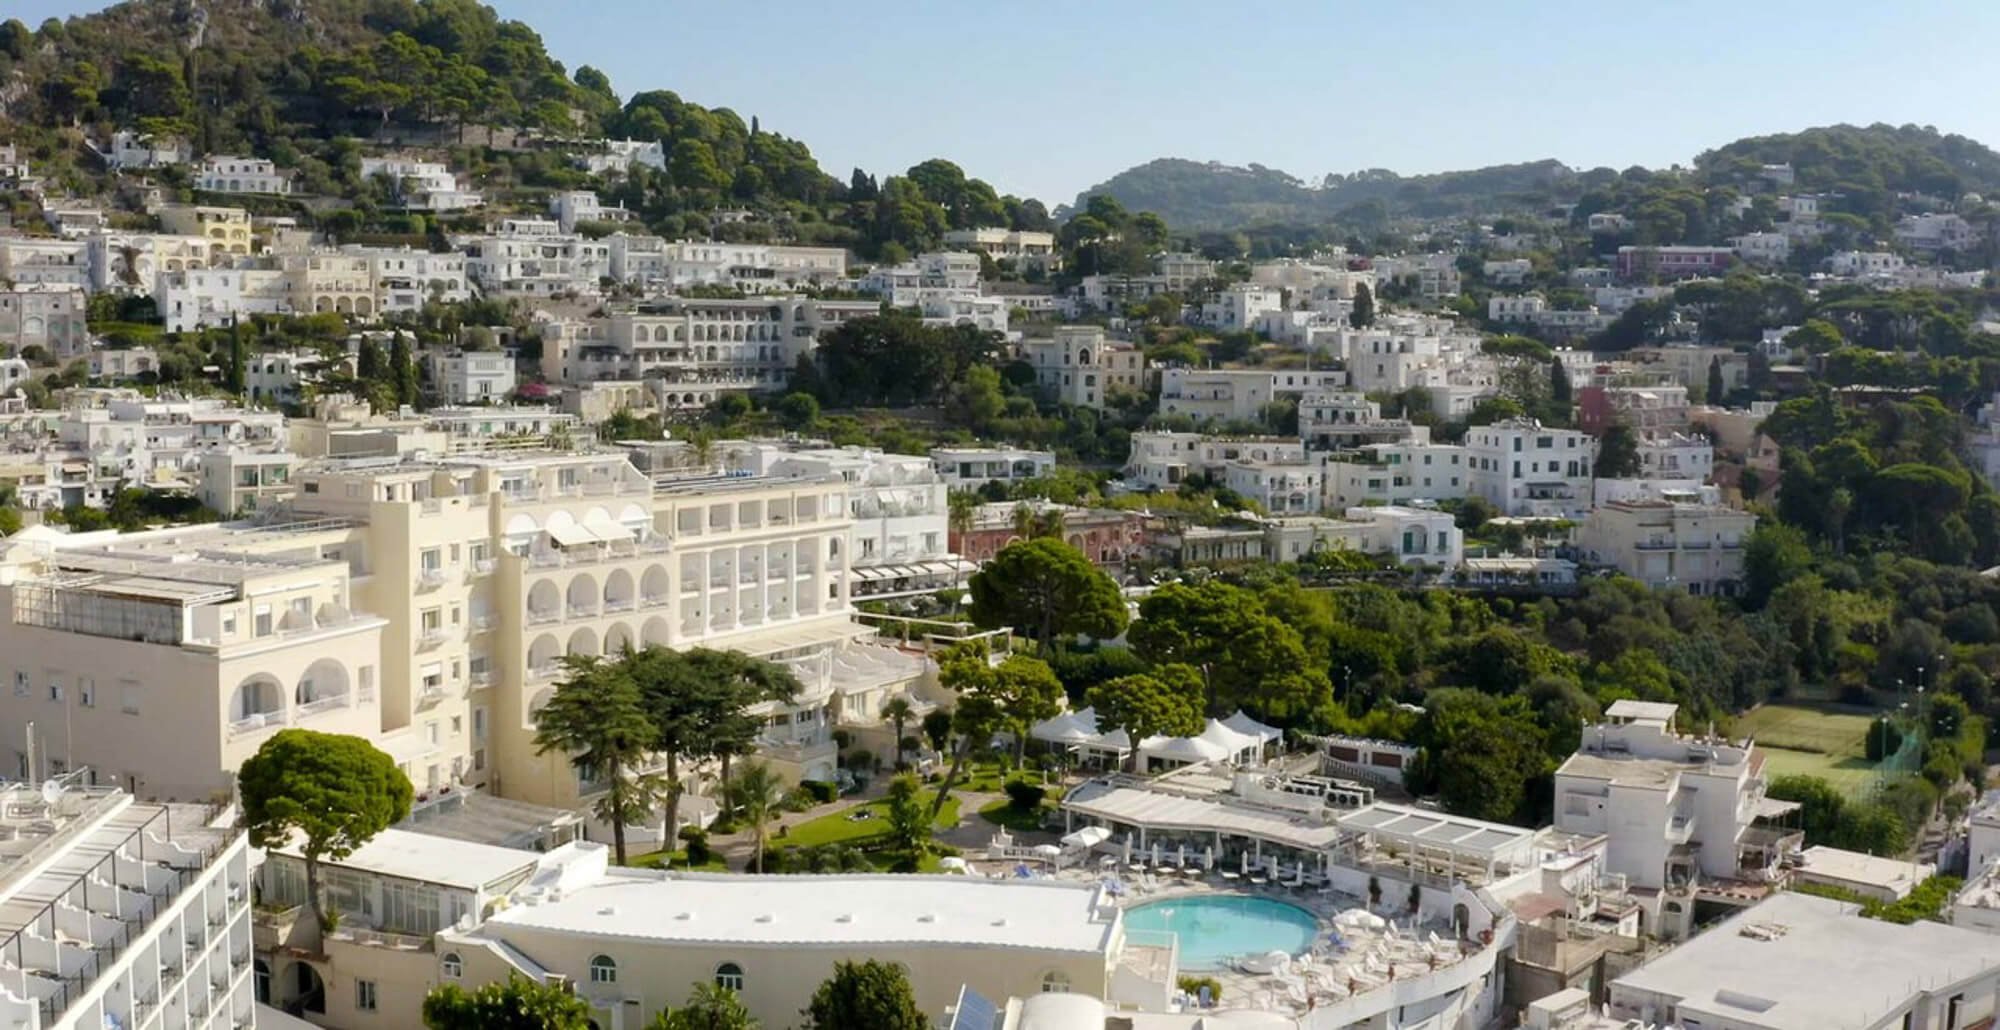 Where to stay in Capri Italy: Grand Hotel Quisisana